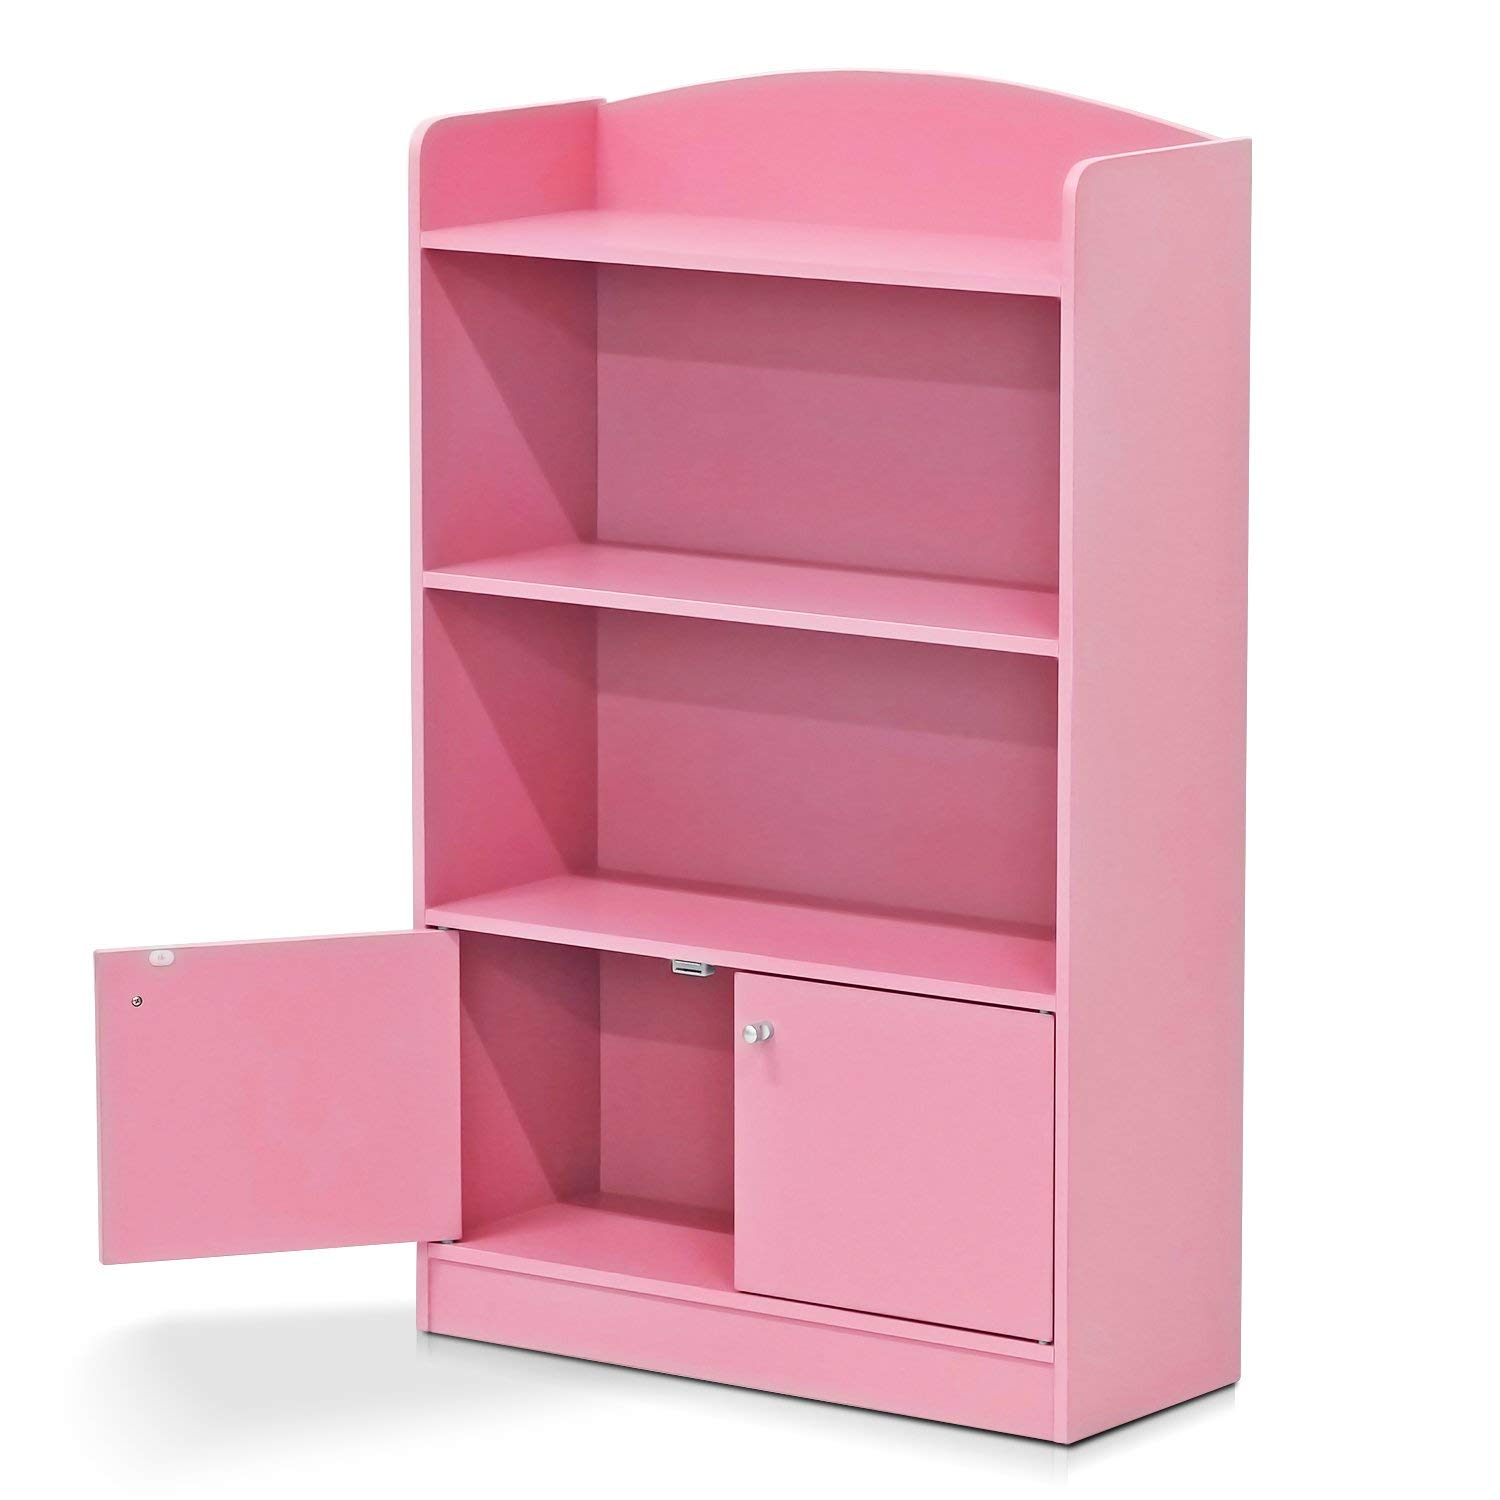 Furinno FR16121PK Stylish Kidkanac Bookshelf with Storage Cabinet, Pink